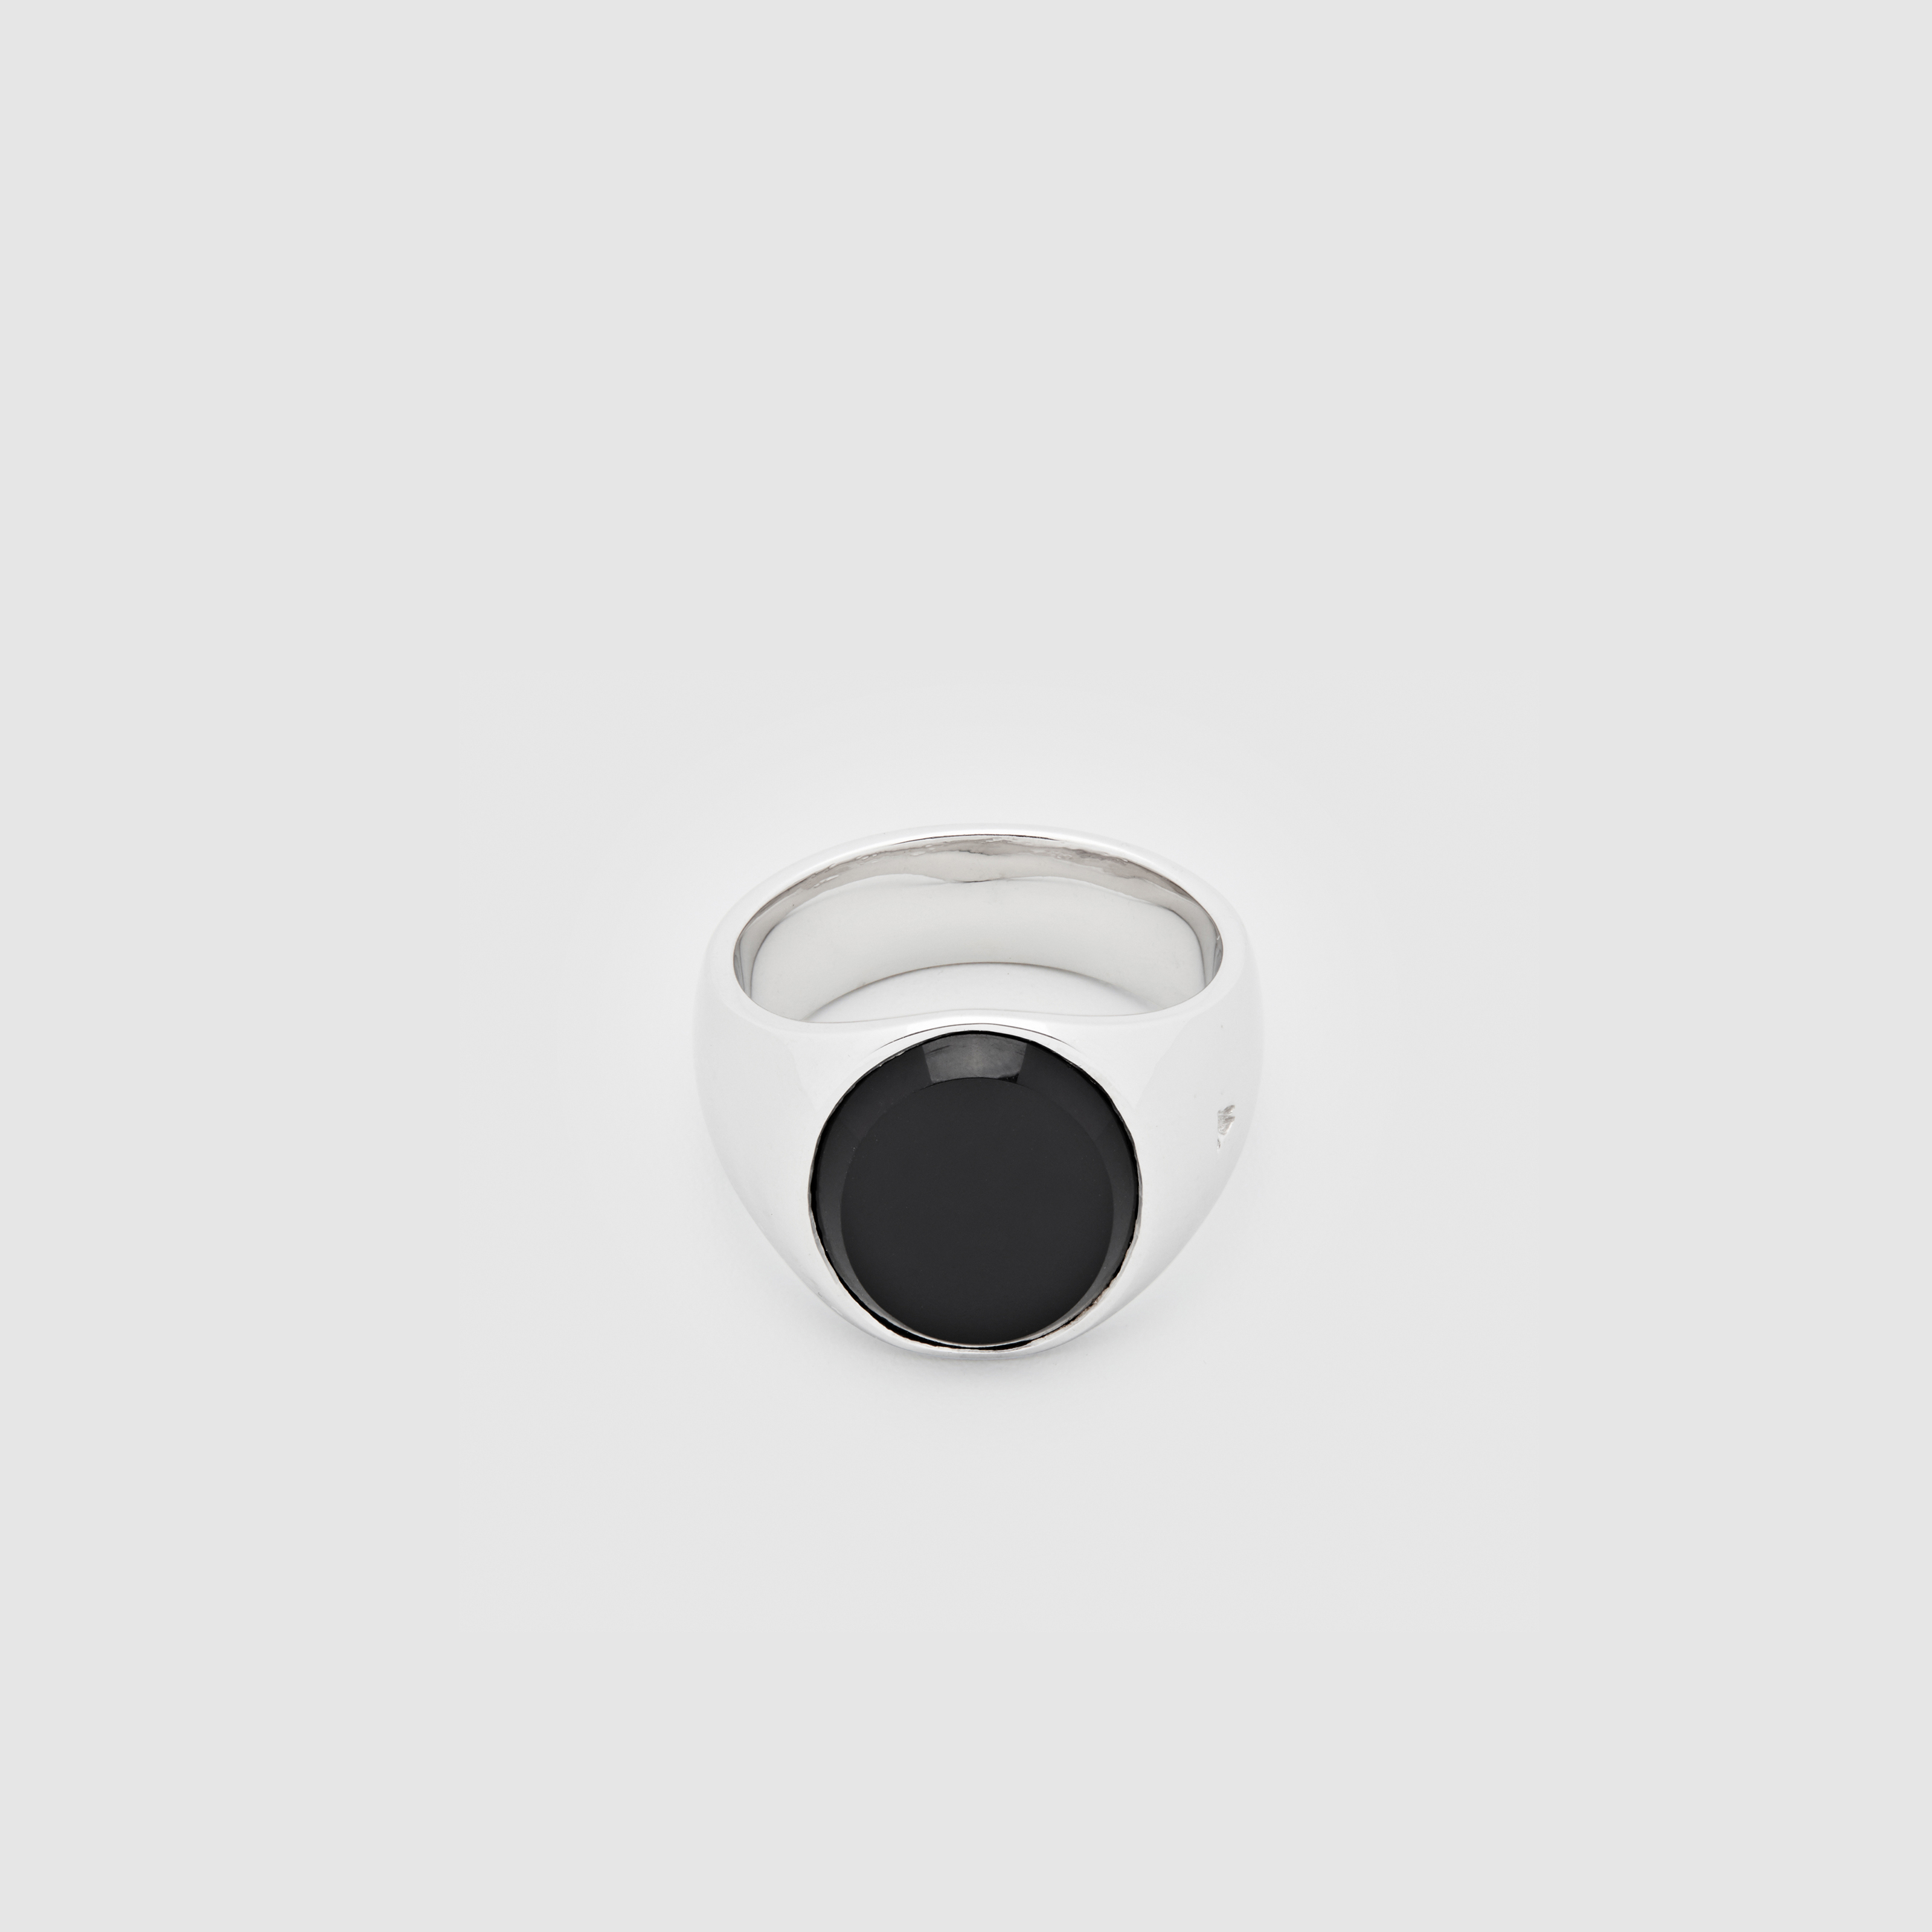 TOMWOOD / トムウッド / Oval Ring Black Onyx / 正規取扱店 / OBLIGE 公式通販 / オンライン